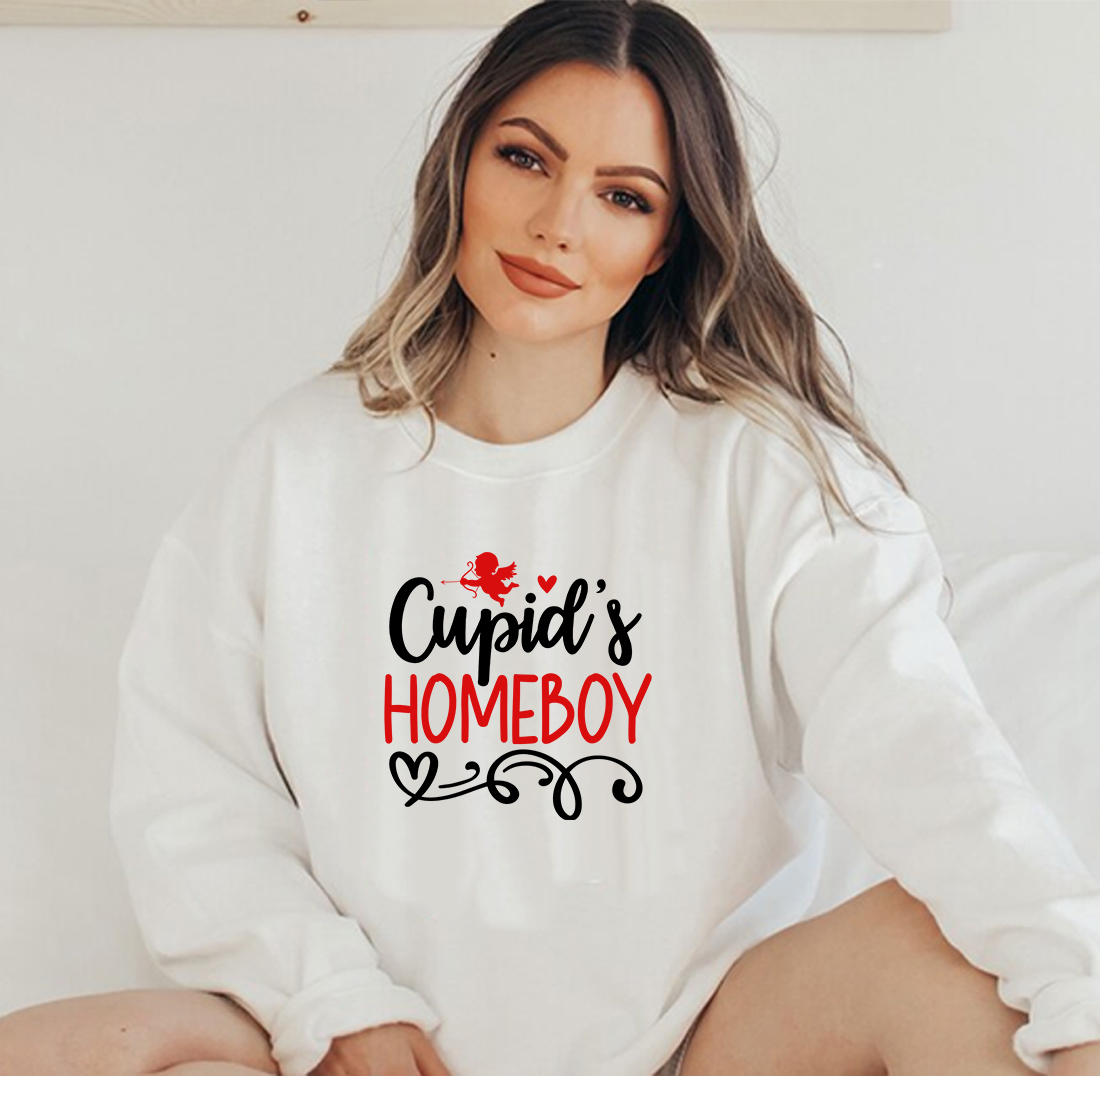 T-shirt Cupids Homeboy SVG Designs Bundle preview image.